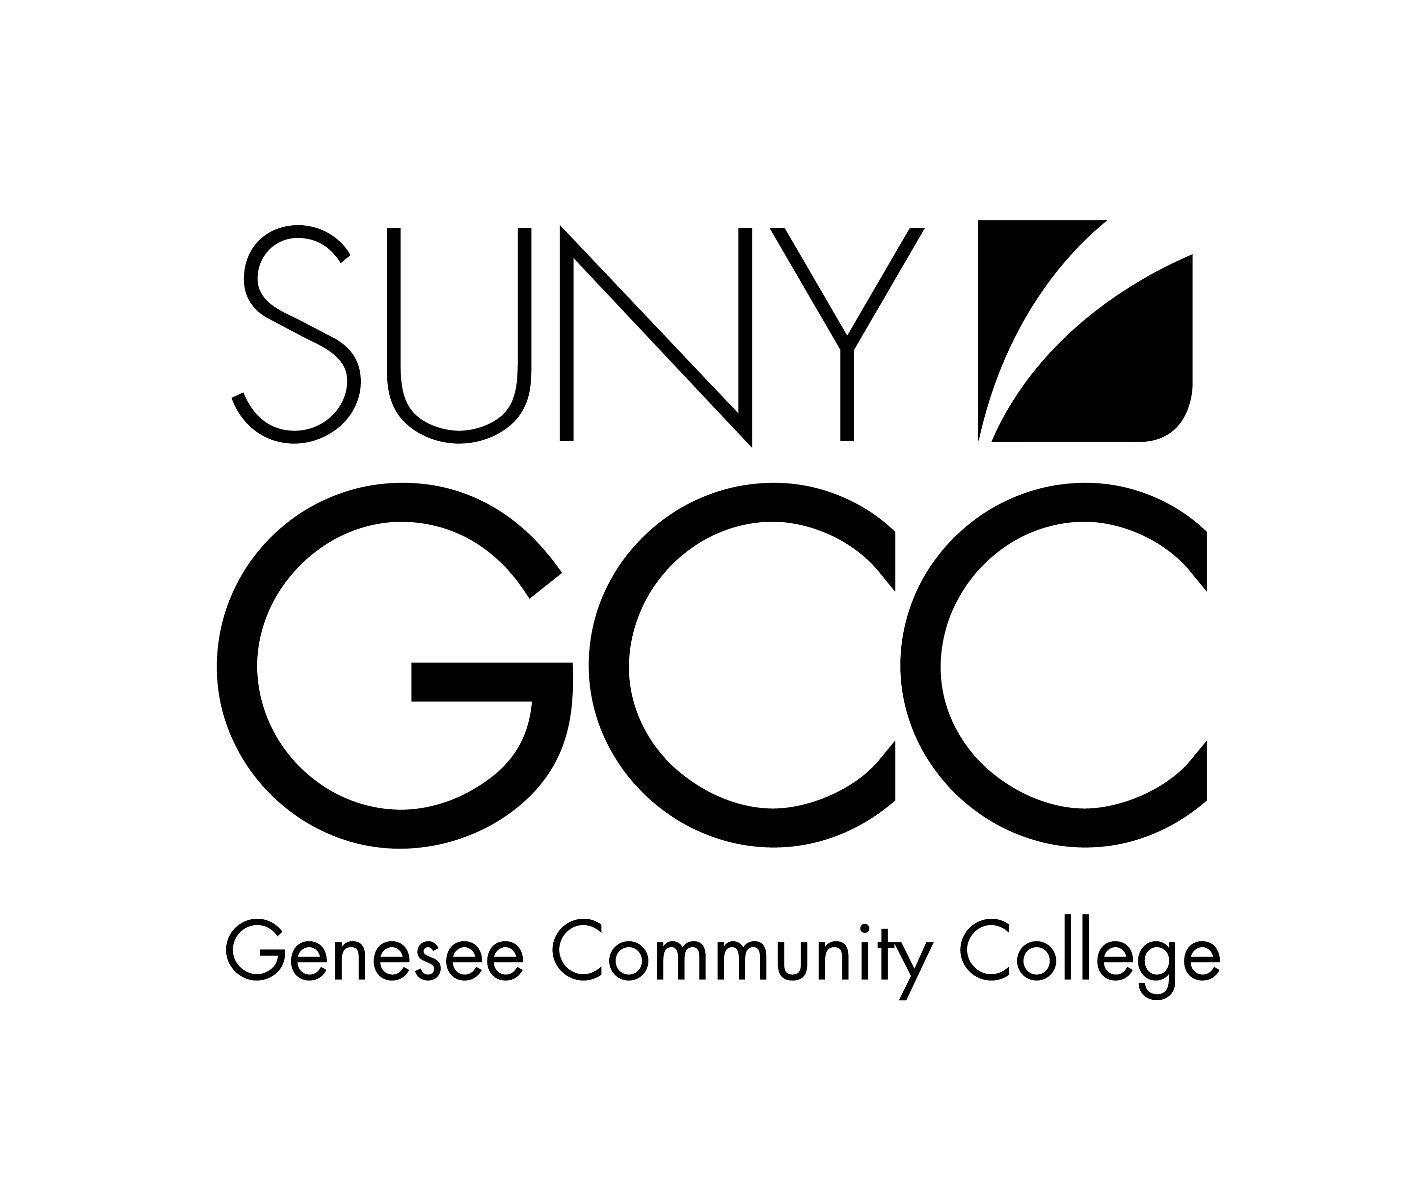 Black and White College Logo - GCC Branding Standards & Logos. SUNY Genesee Community College